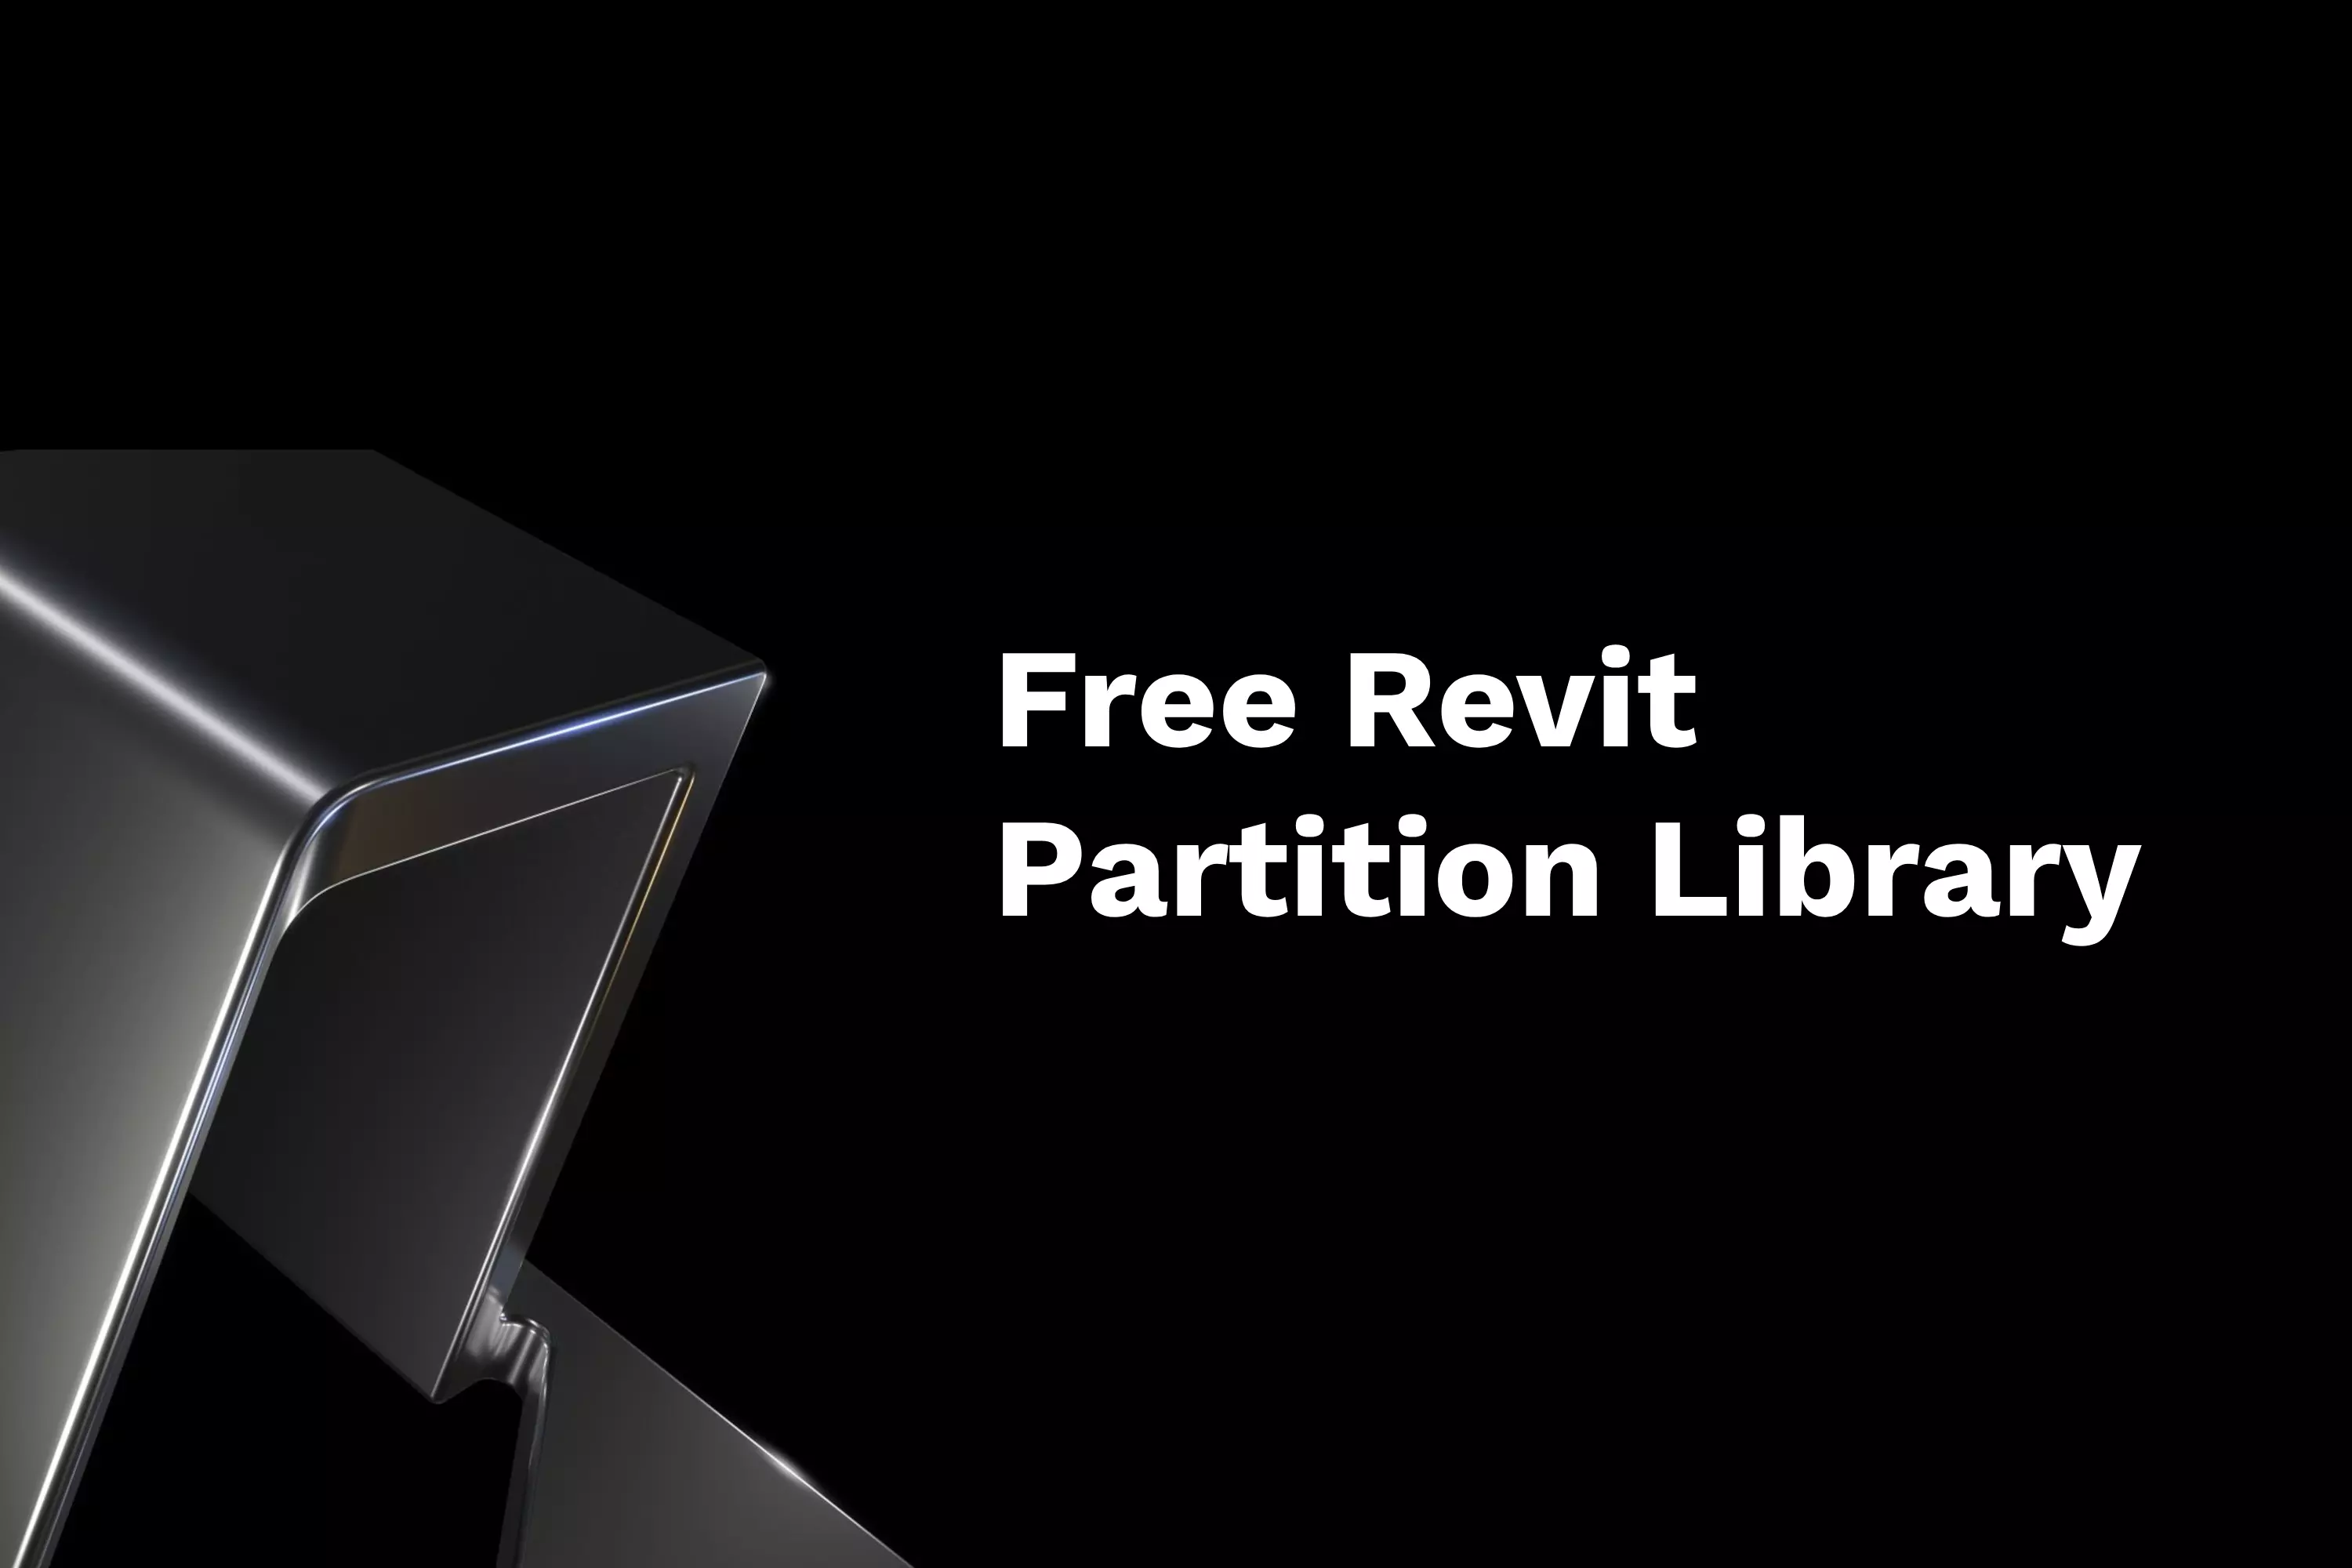 Free Revit Partition Library